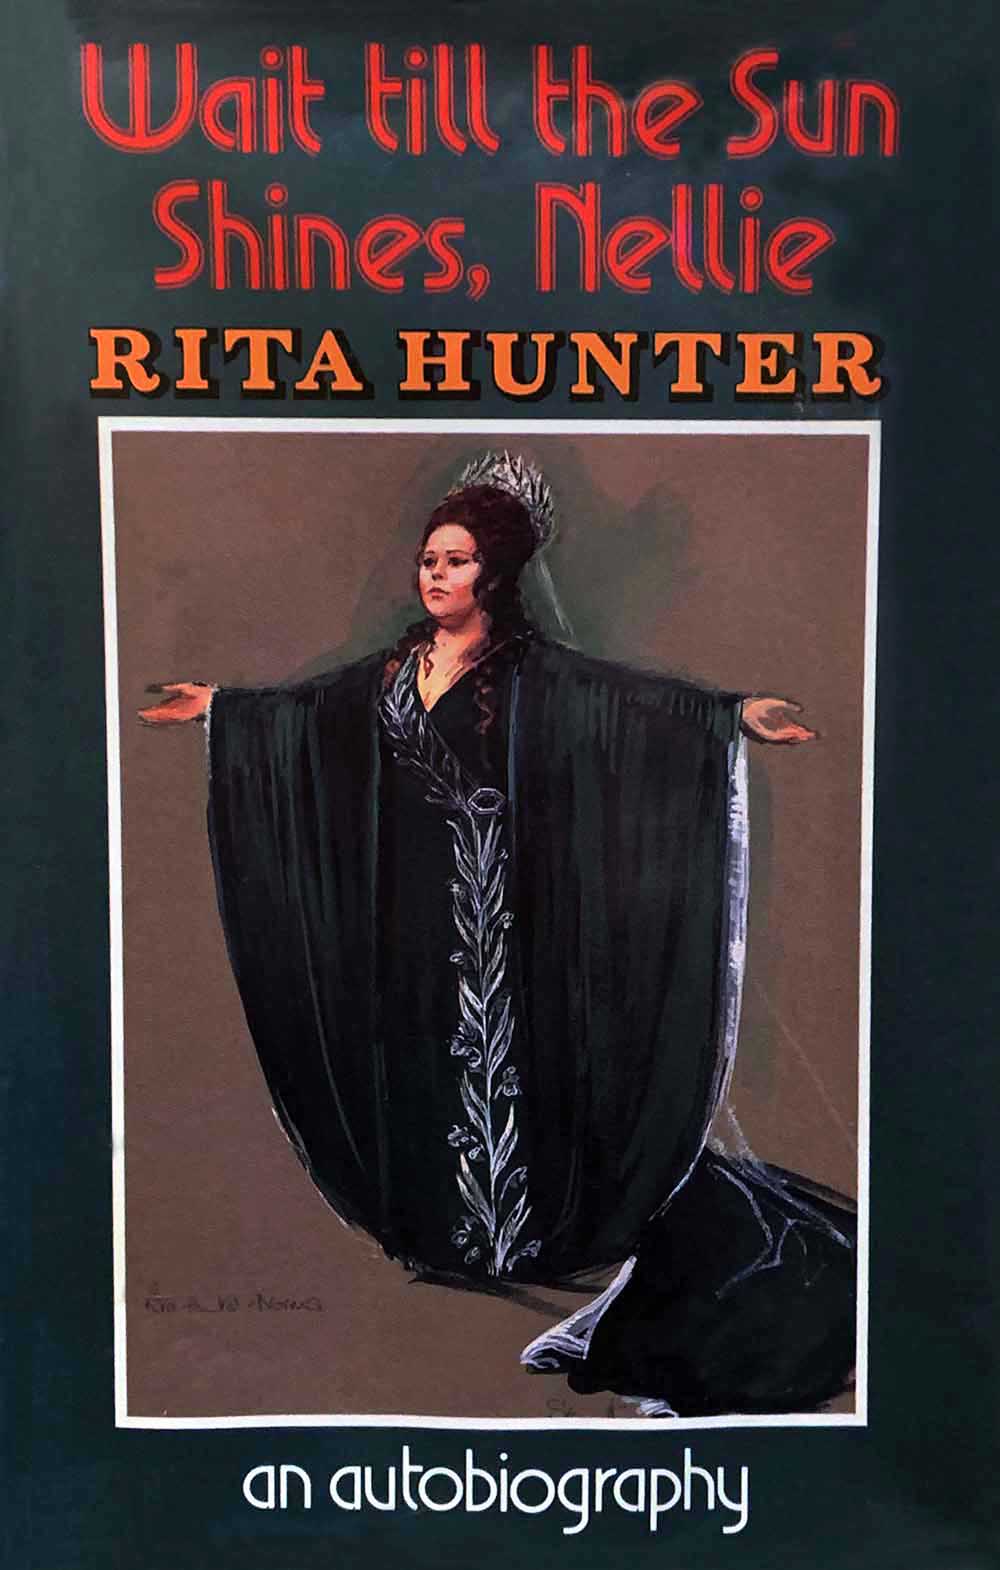 Rita Hunter's autobiography